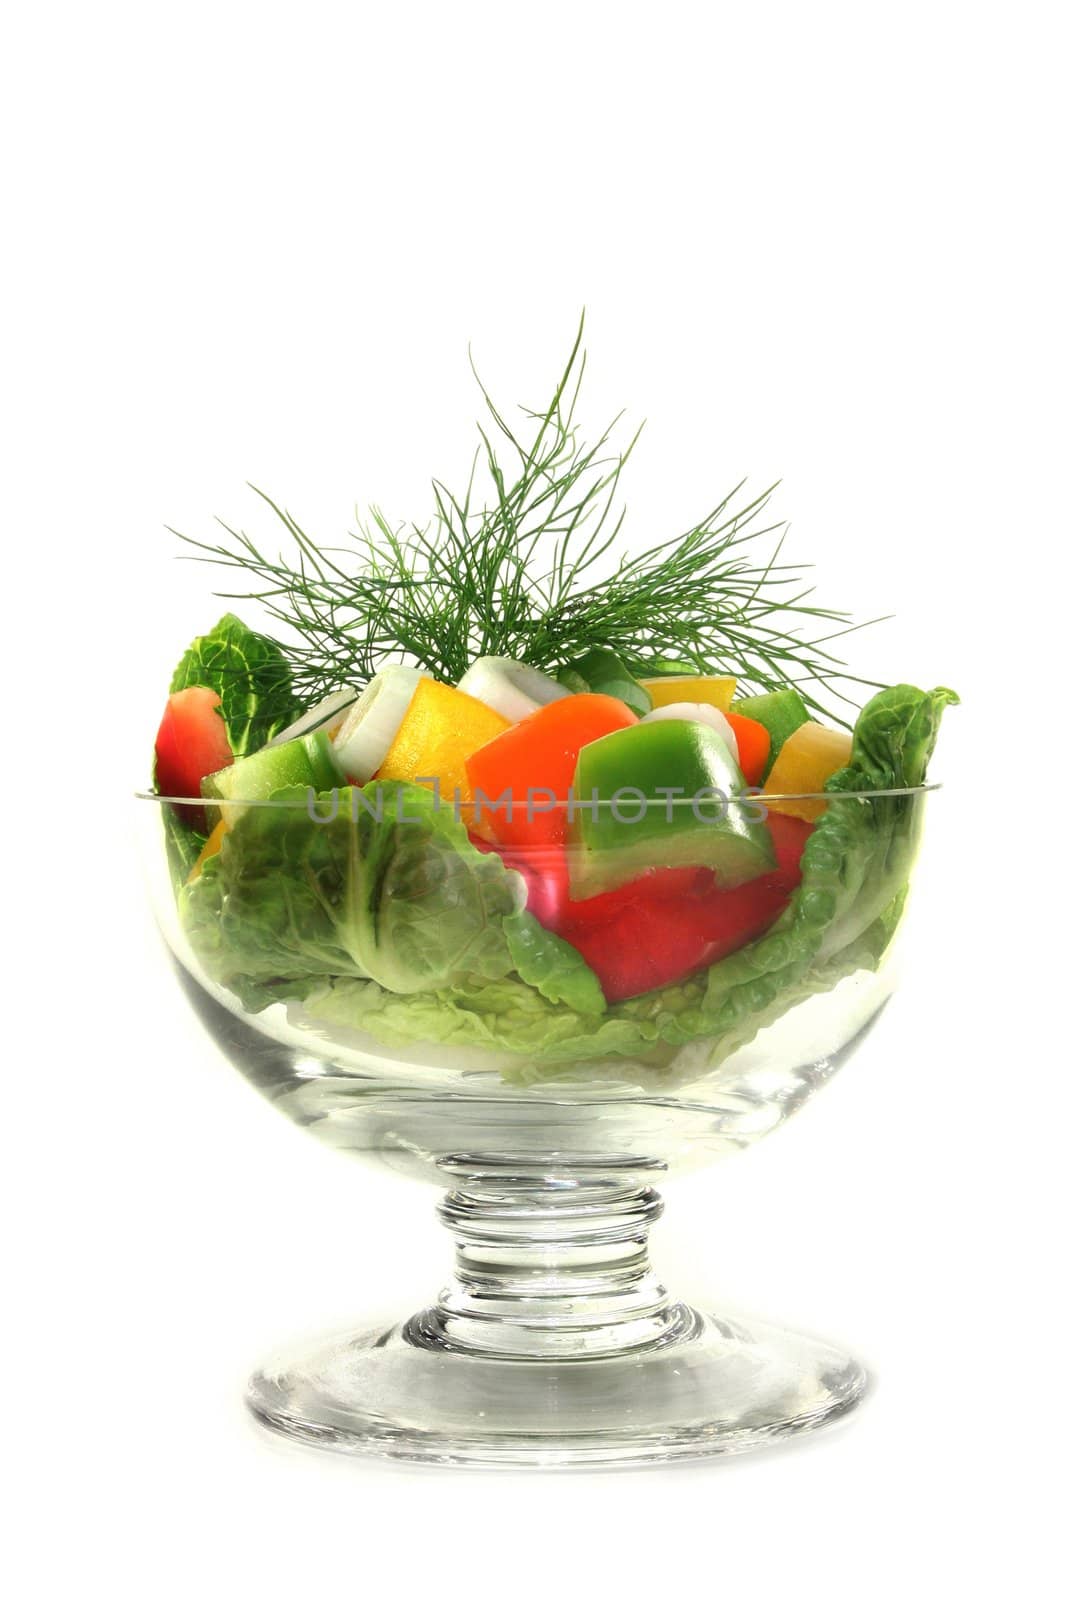 Bell pepper salad by silencefoto